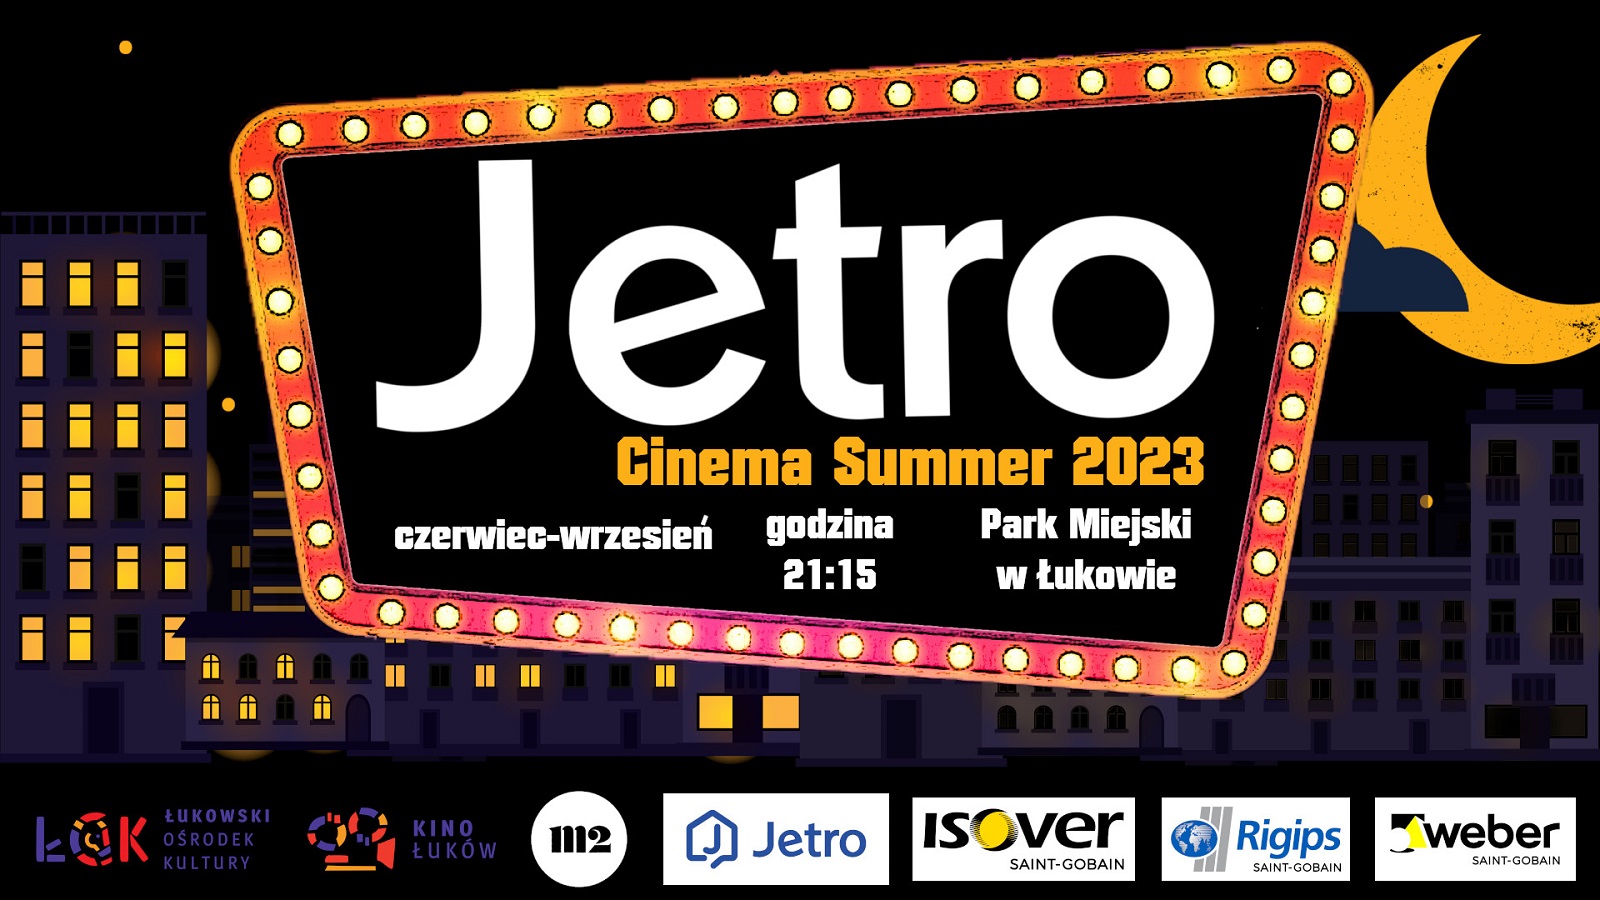 Rusza Jetro Cinema Summer 2023